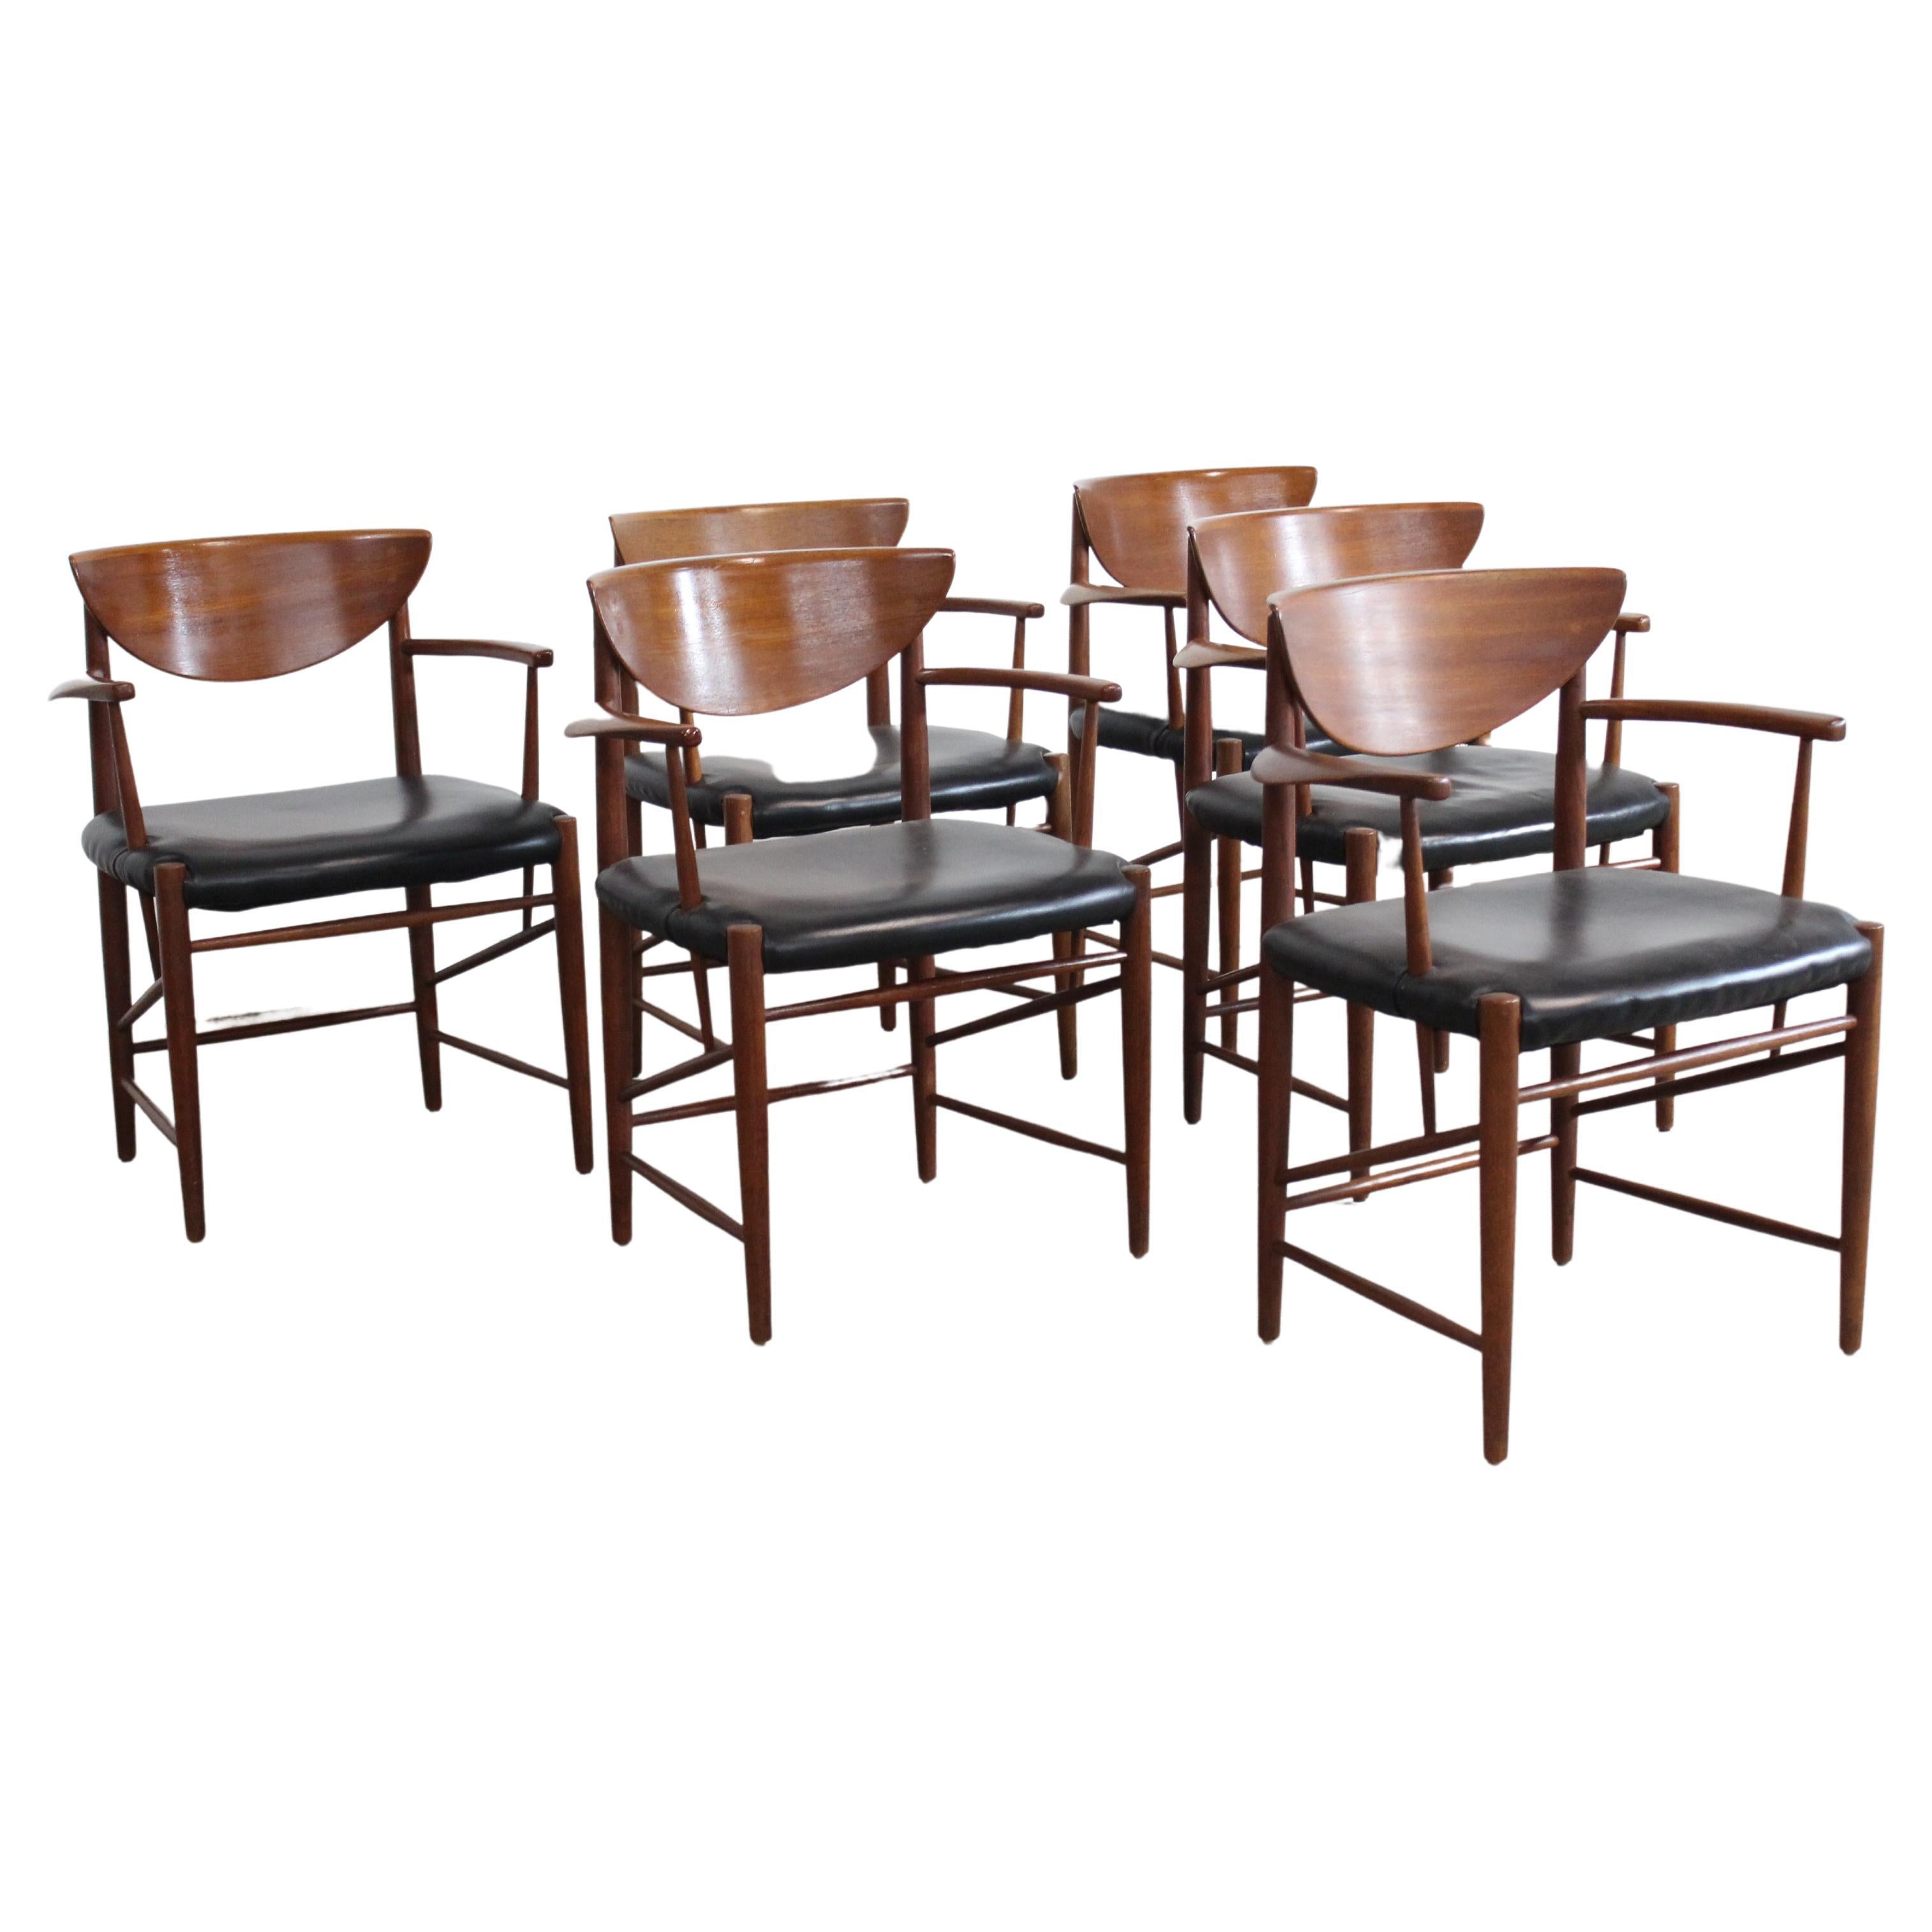 Set of 6 Mid-Century Modern Danish Modern Peter Hvidt Teak Dining Chairs